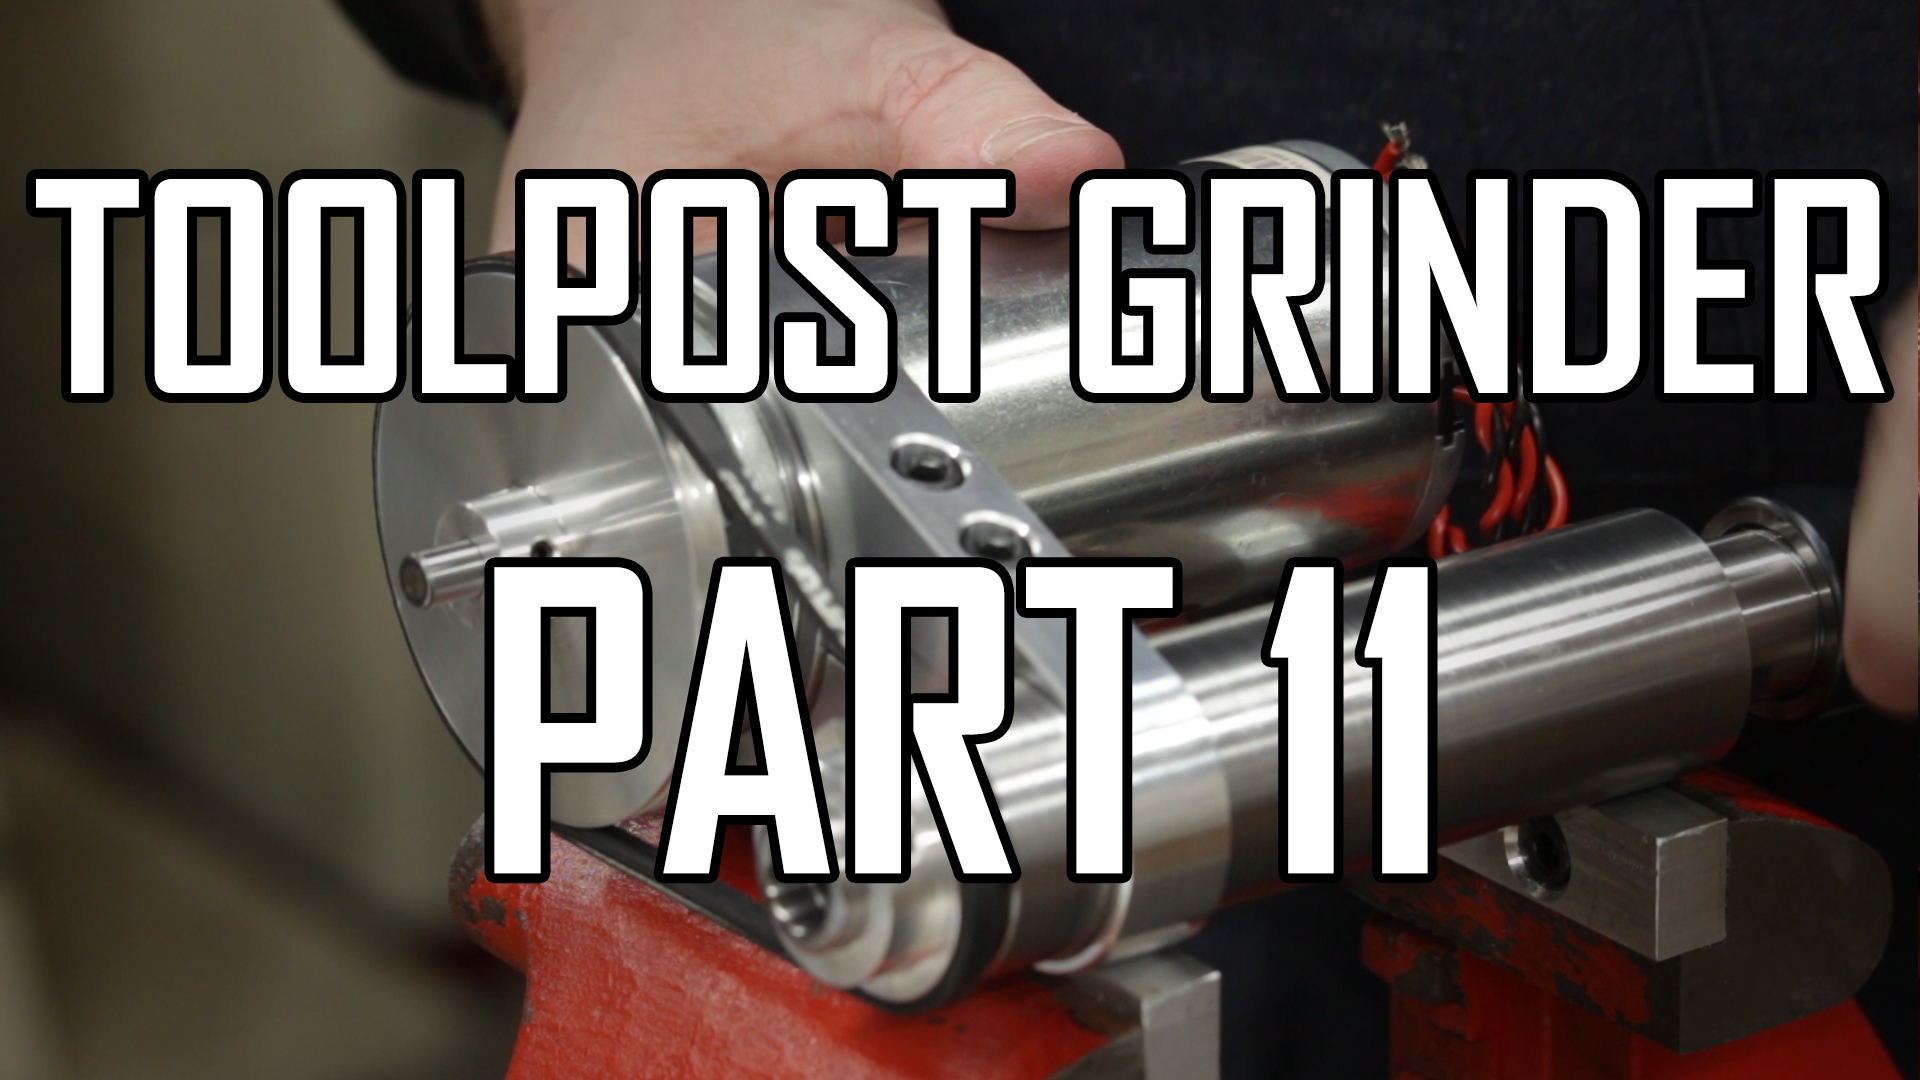 Toolpost Grinder Part 11: Motor Clamp 3